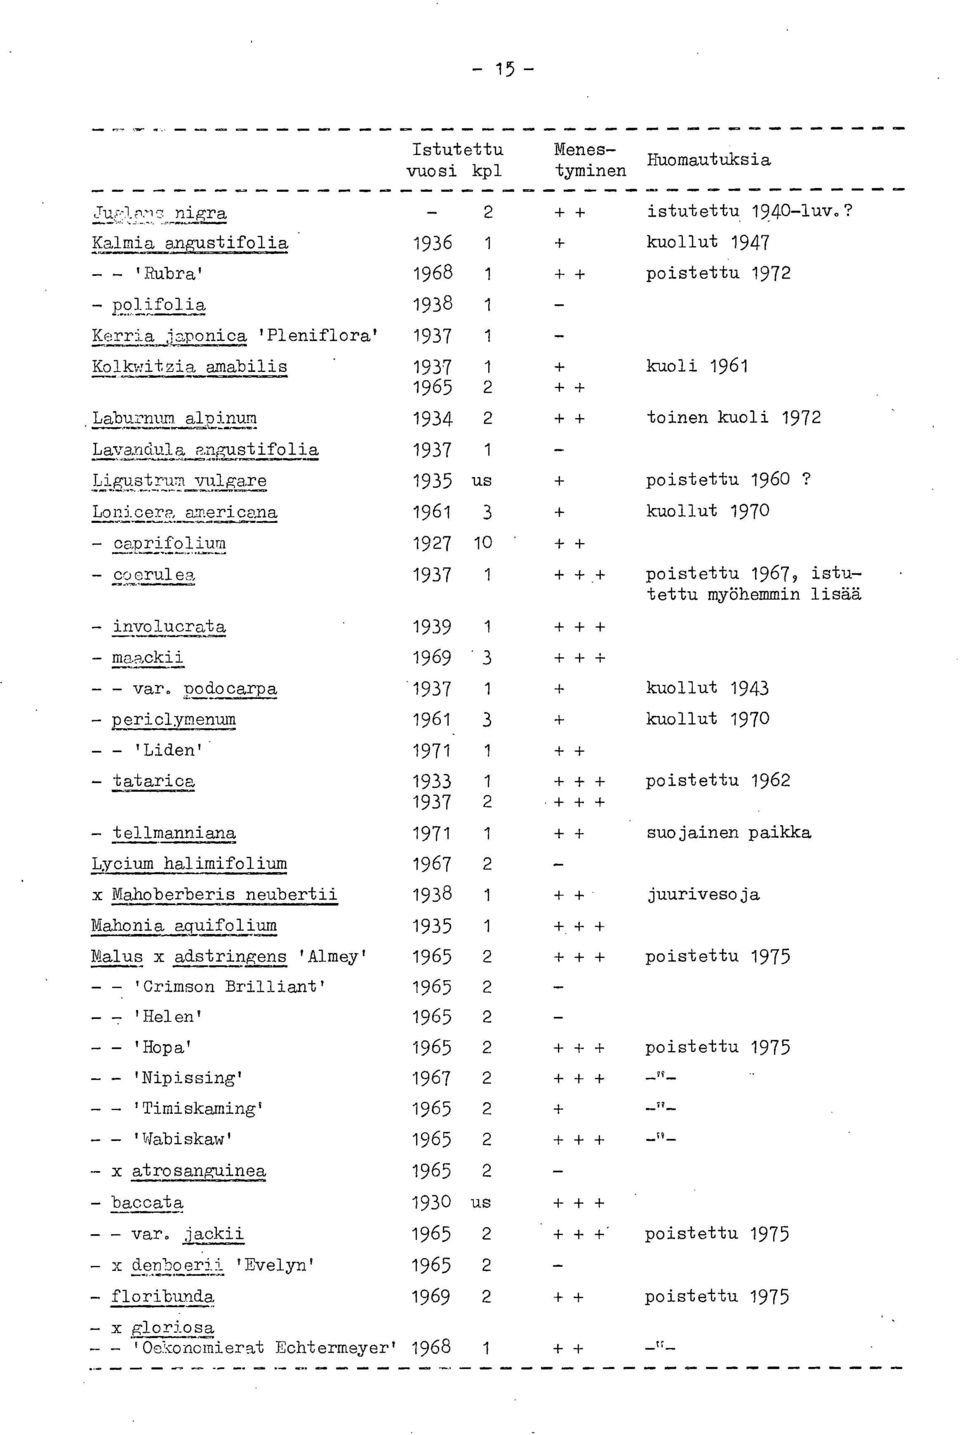 Laburnum alpinum 1934 2 + + Lavandula angustifolia 1937 1 _ Ligustrum vulgare 1935 us + Lonicera am ericana 1961 3 + - caprifolium 1927 10 + + - ccerulea 1937 1 + +,+ - involucrata 1939 1 + + + -